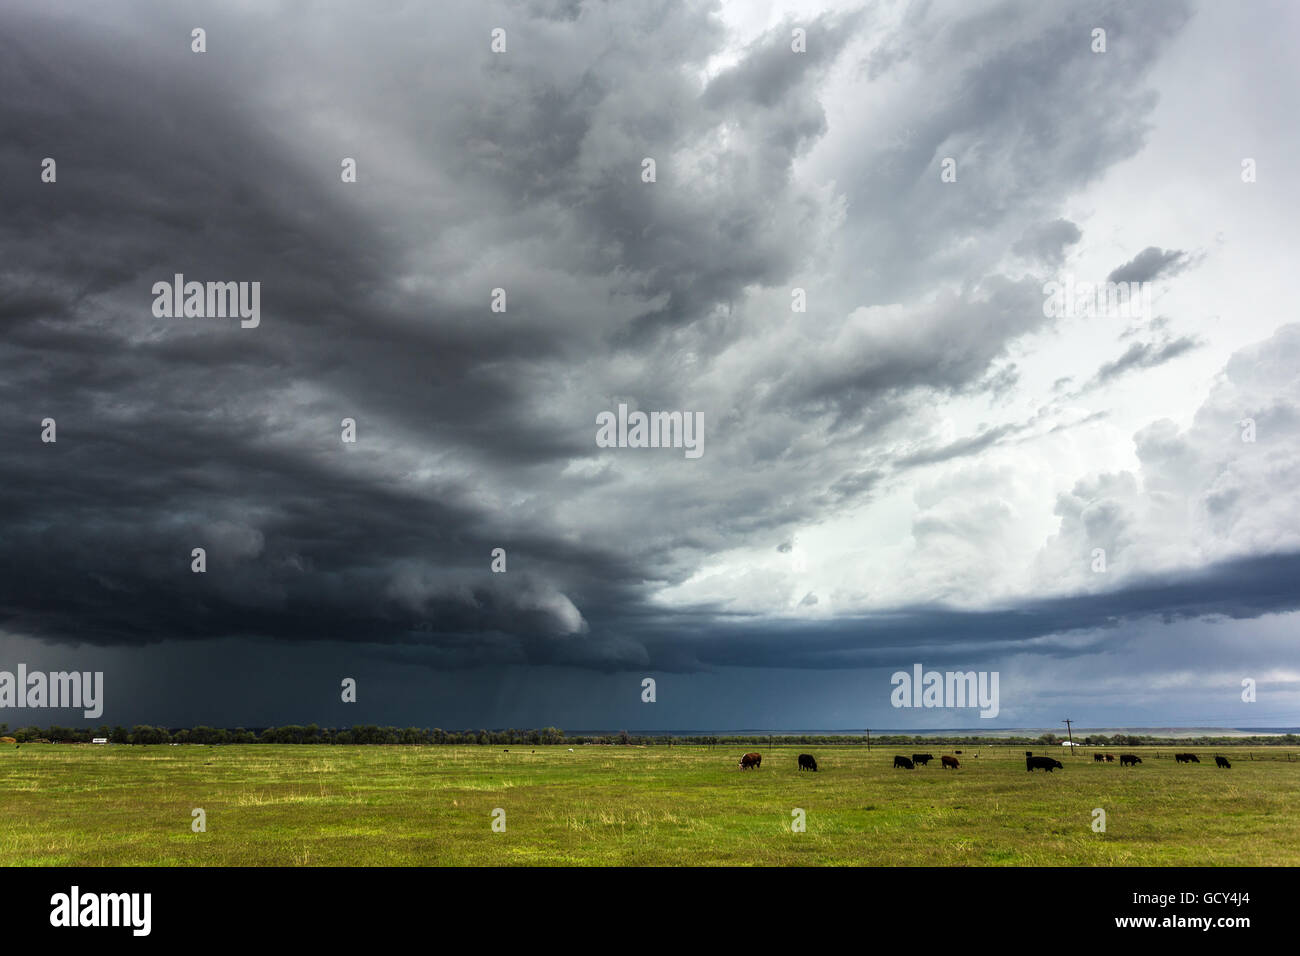 Cows graze under a stormy sky near Bridgeport, Nebraska, May 15, 2015. Stock Photo